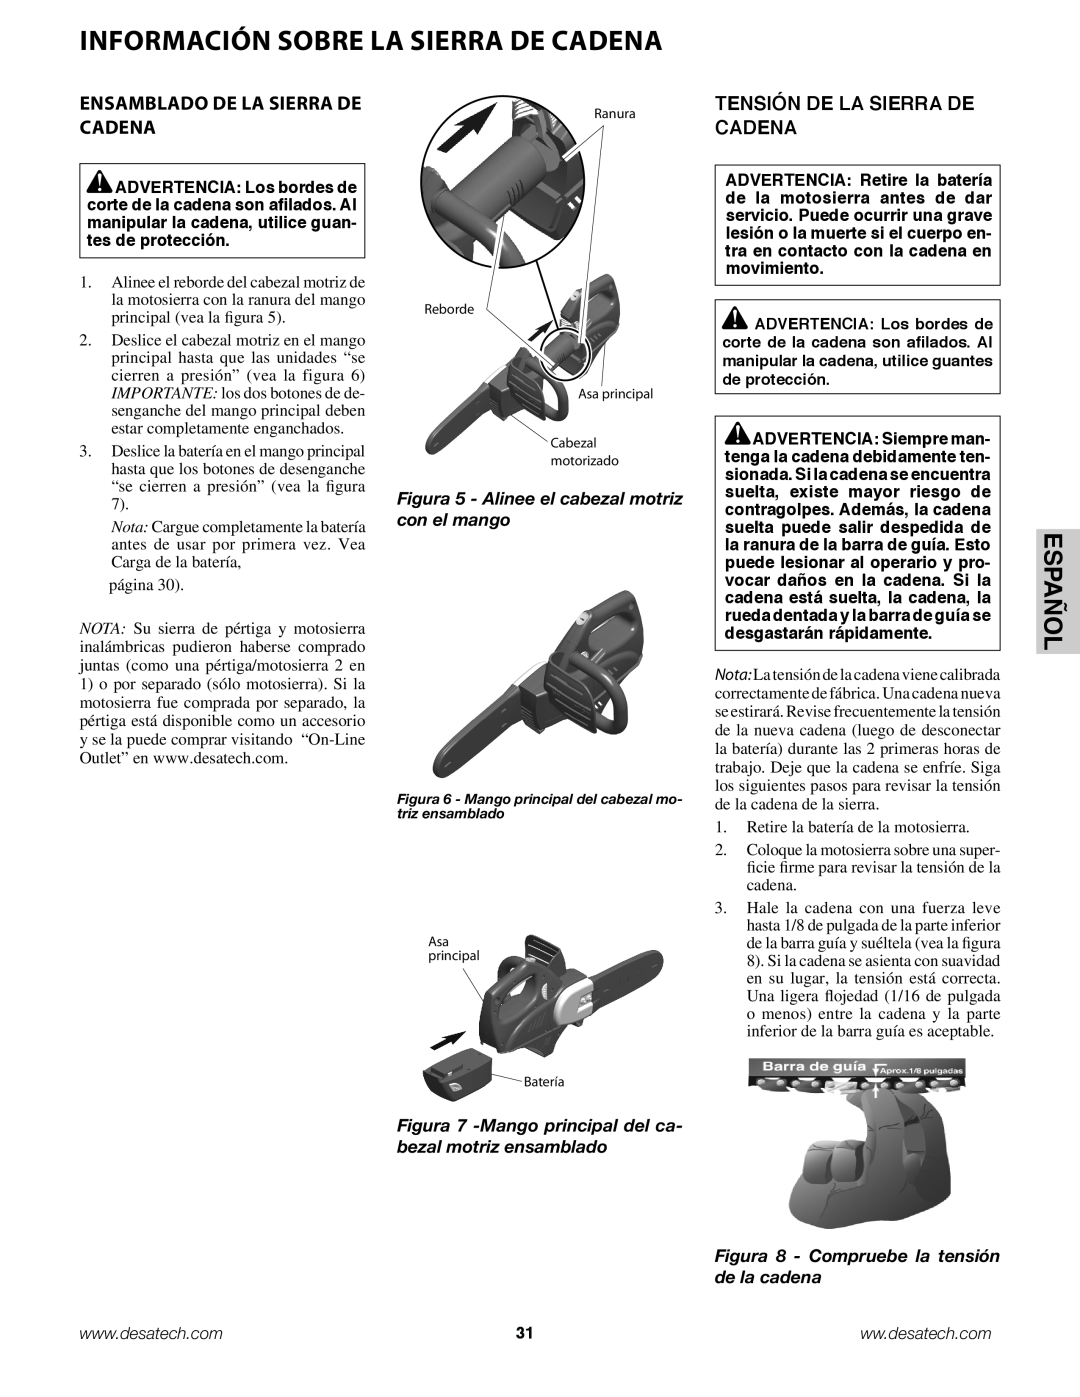 Remington Power Tools BS188A, BPS188A, BS188A owner manual Información sobre la sierra de cadena, Español 